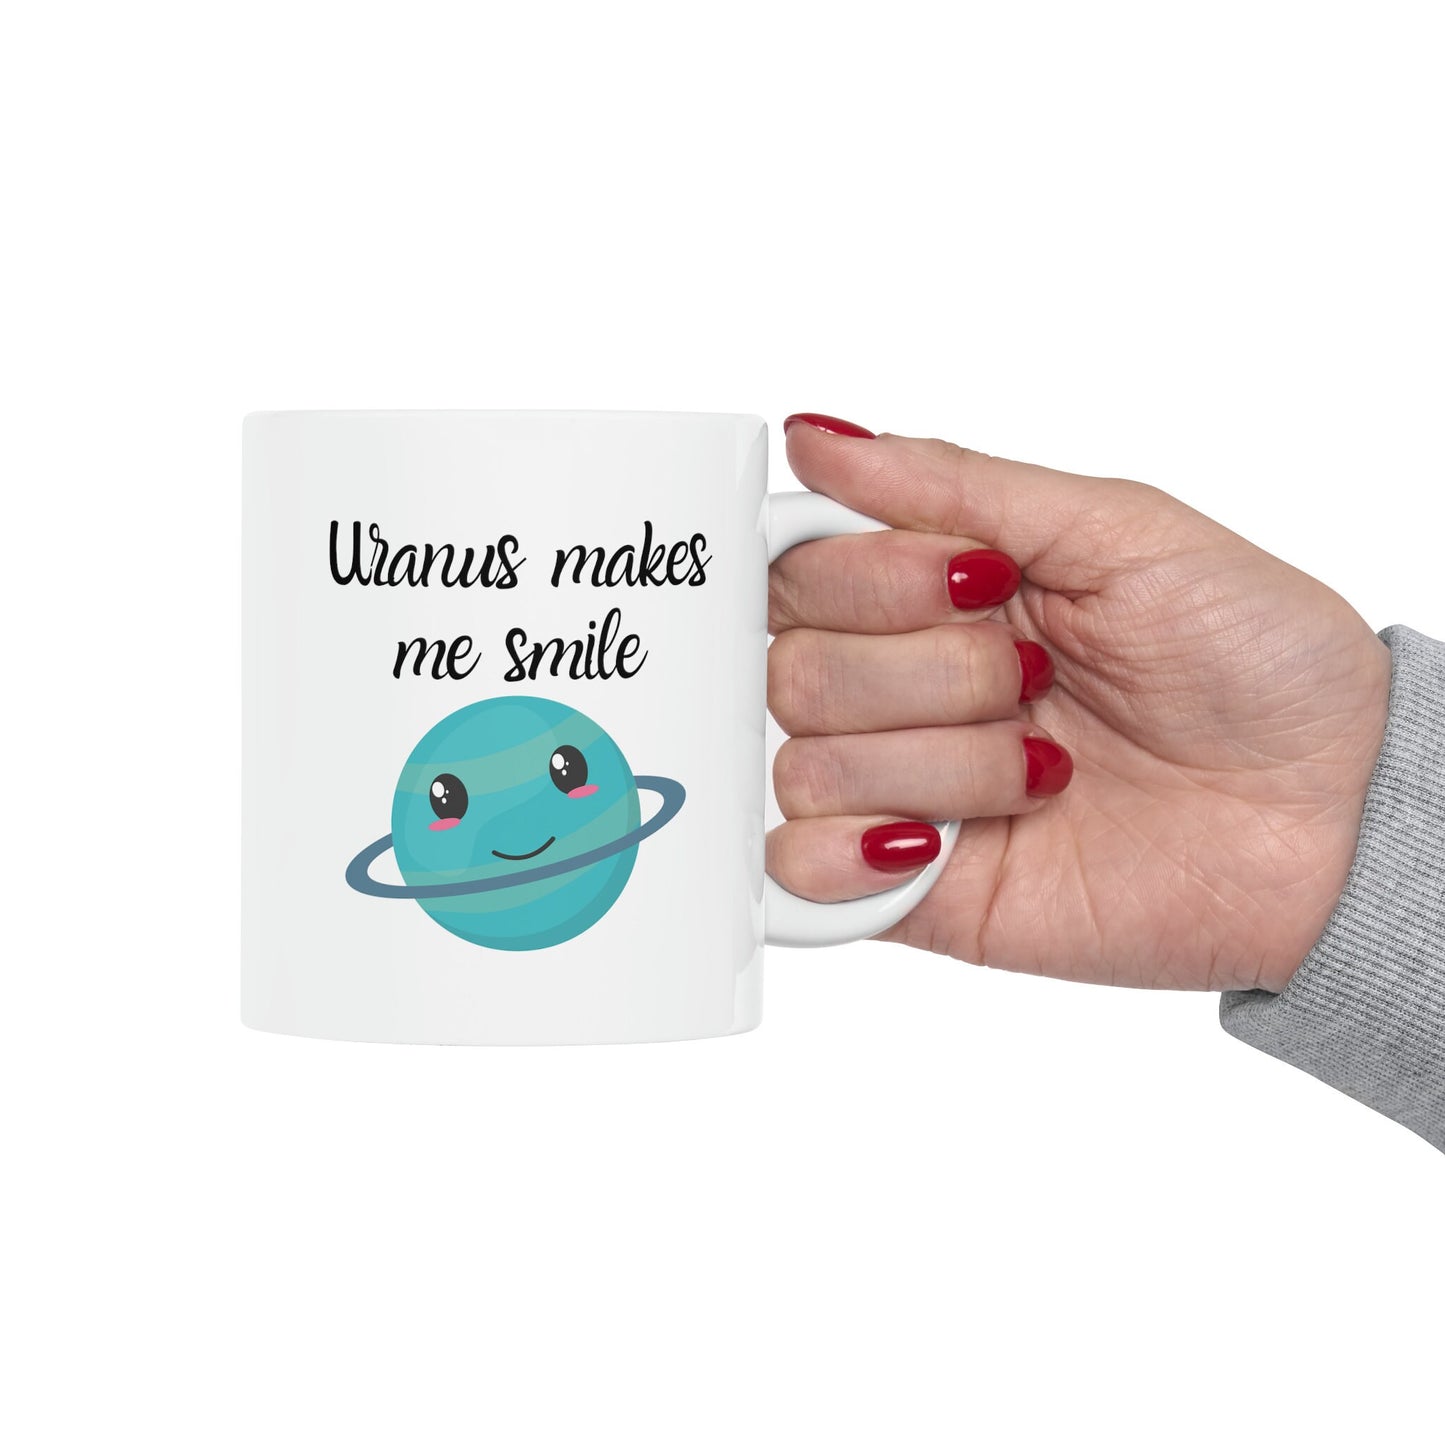 Uranus makes me Smile Coffee Mug, Uranus Mug, Cute Uranus Planet Mug, Funny Mug from Uranus, Drink from Uranus, Uranus Ceramic Mug,